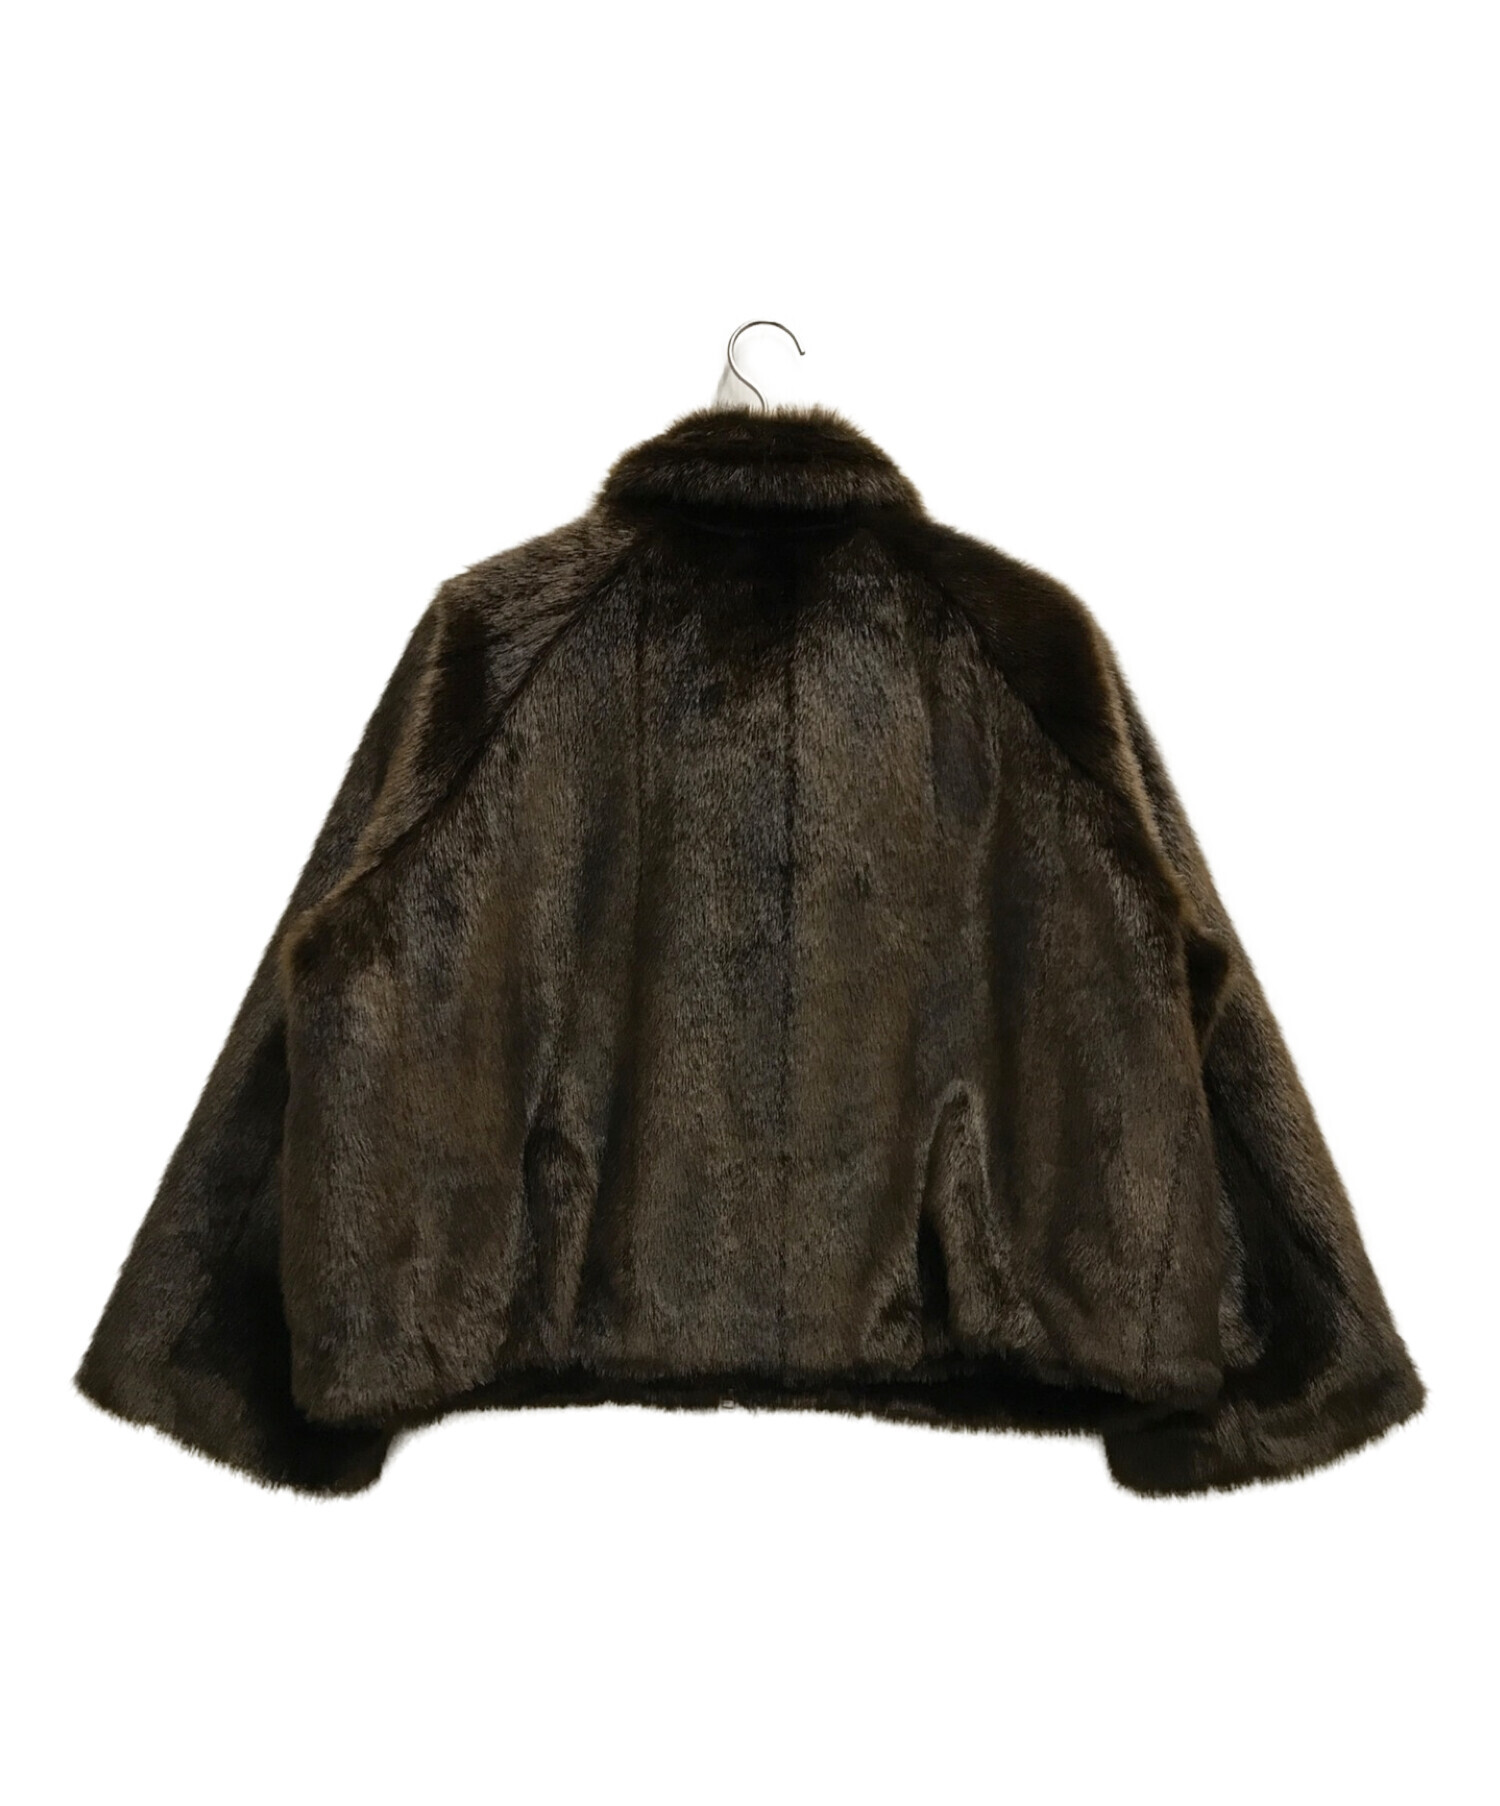 LEINWANDE (ラインヴァンド) Faux Fur Jacket ブラウン サイズ:FREE